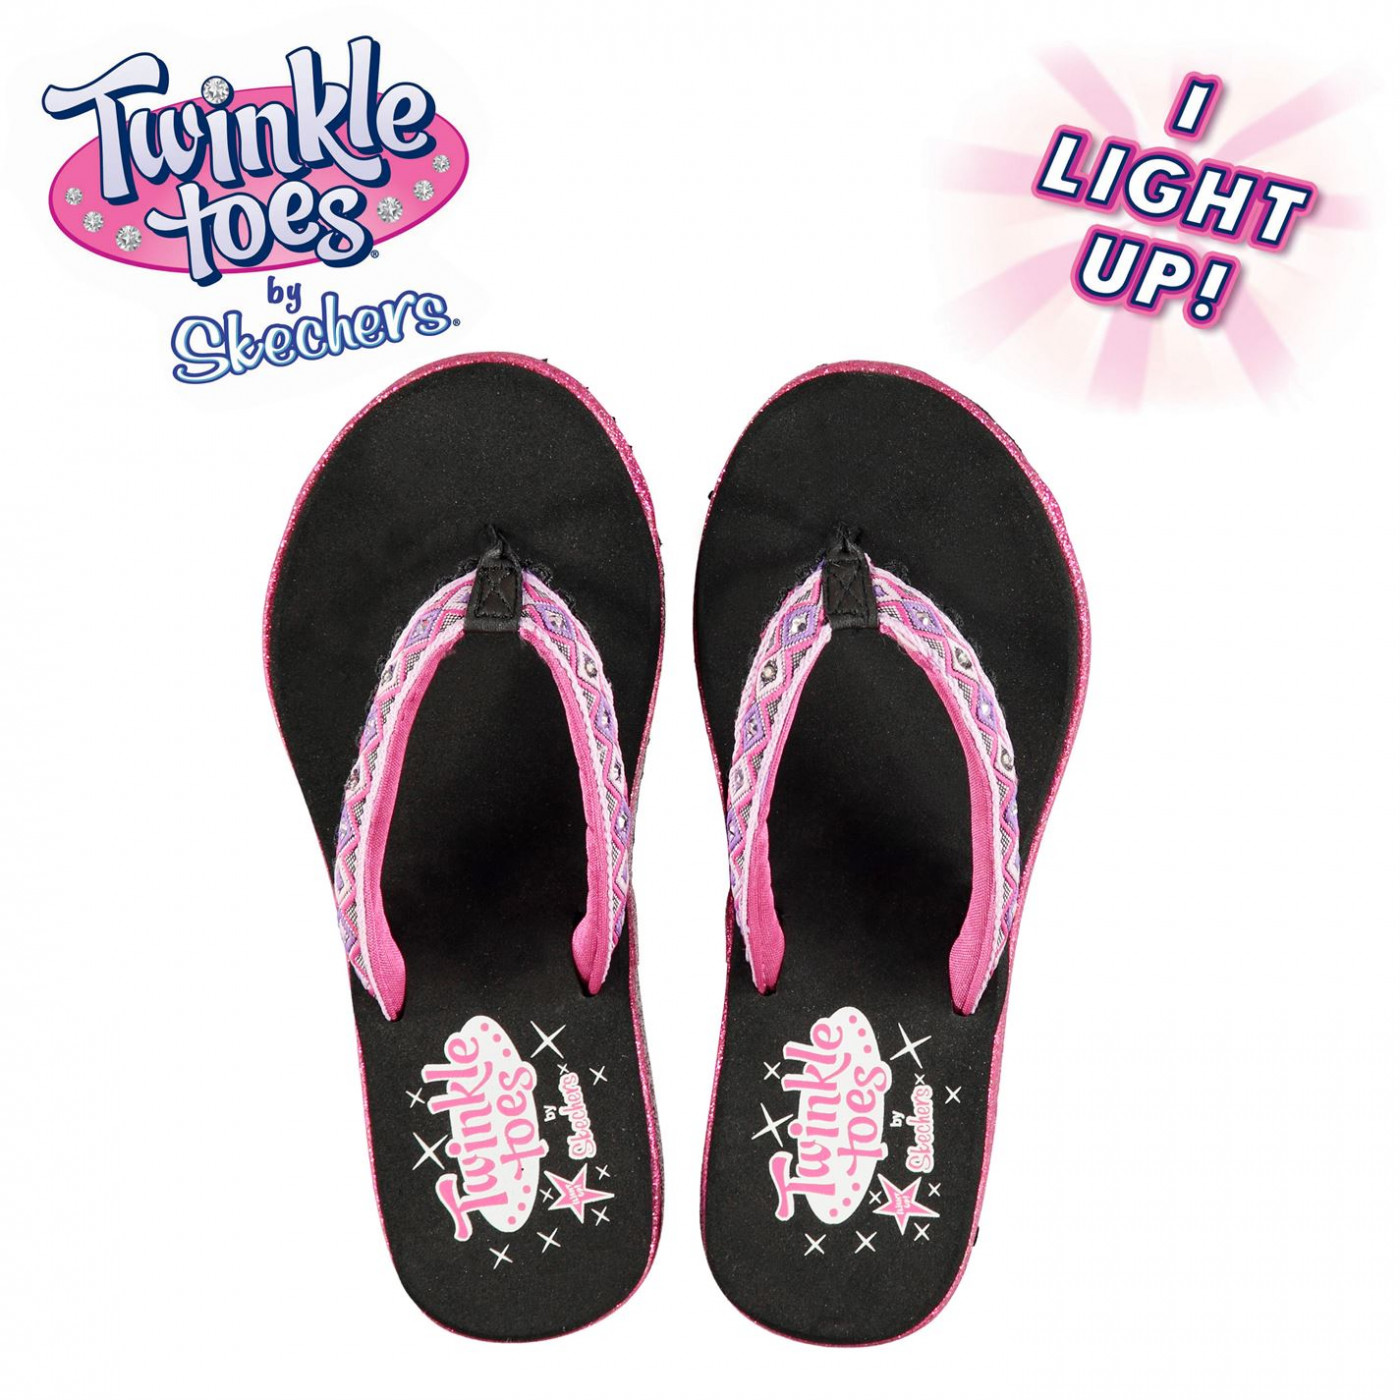 skechers twinkle toes flip flops